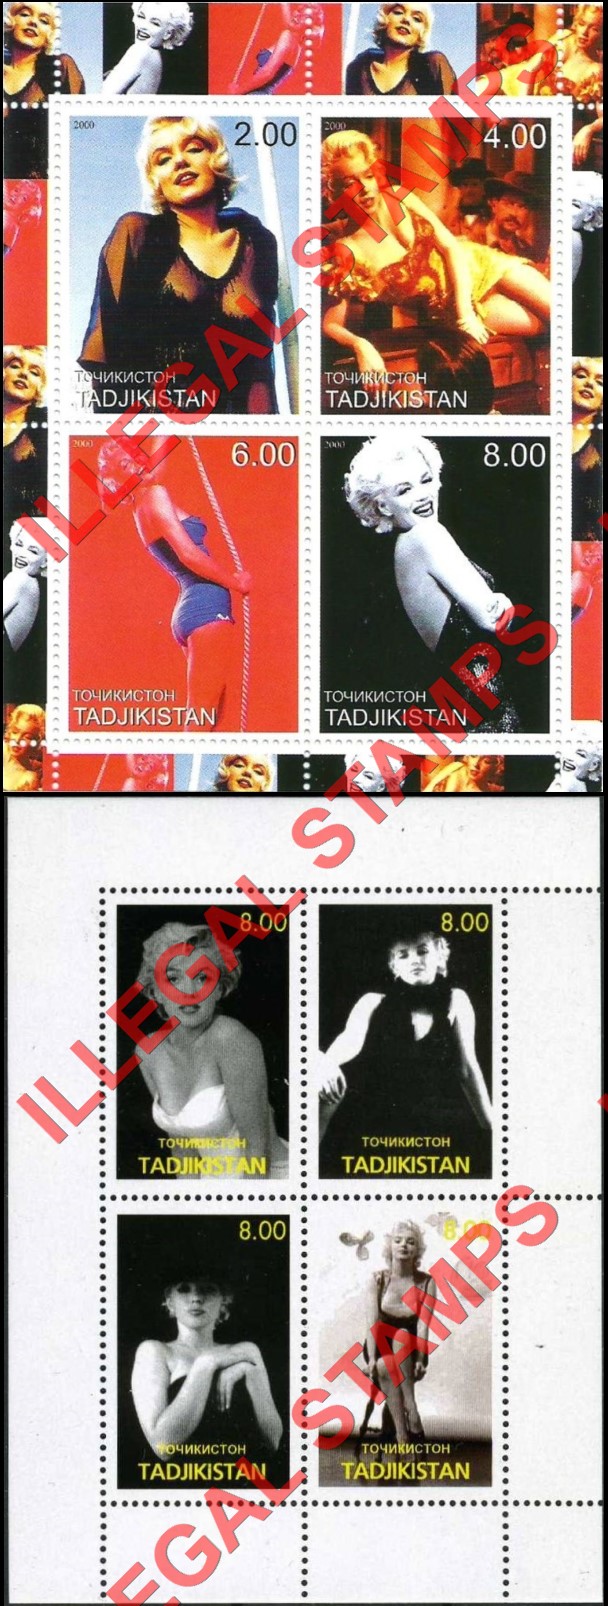 Tajikistan 2000 Marilyn Monroe Illegal Stamp Souvenir Sheets of 4